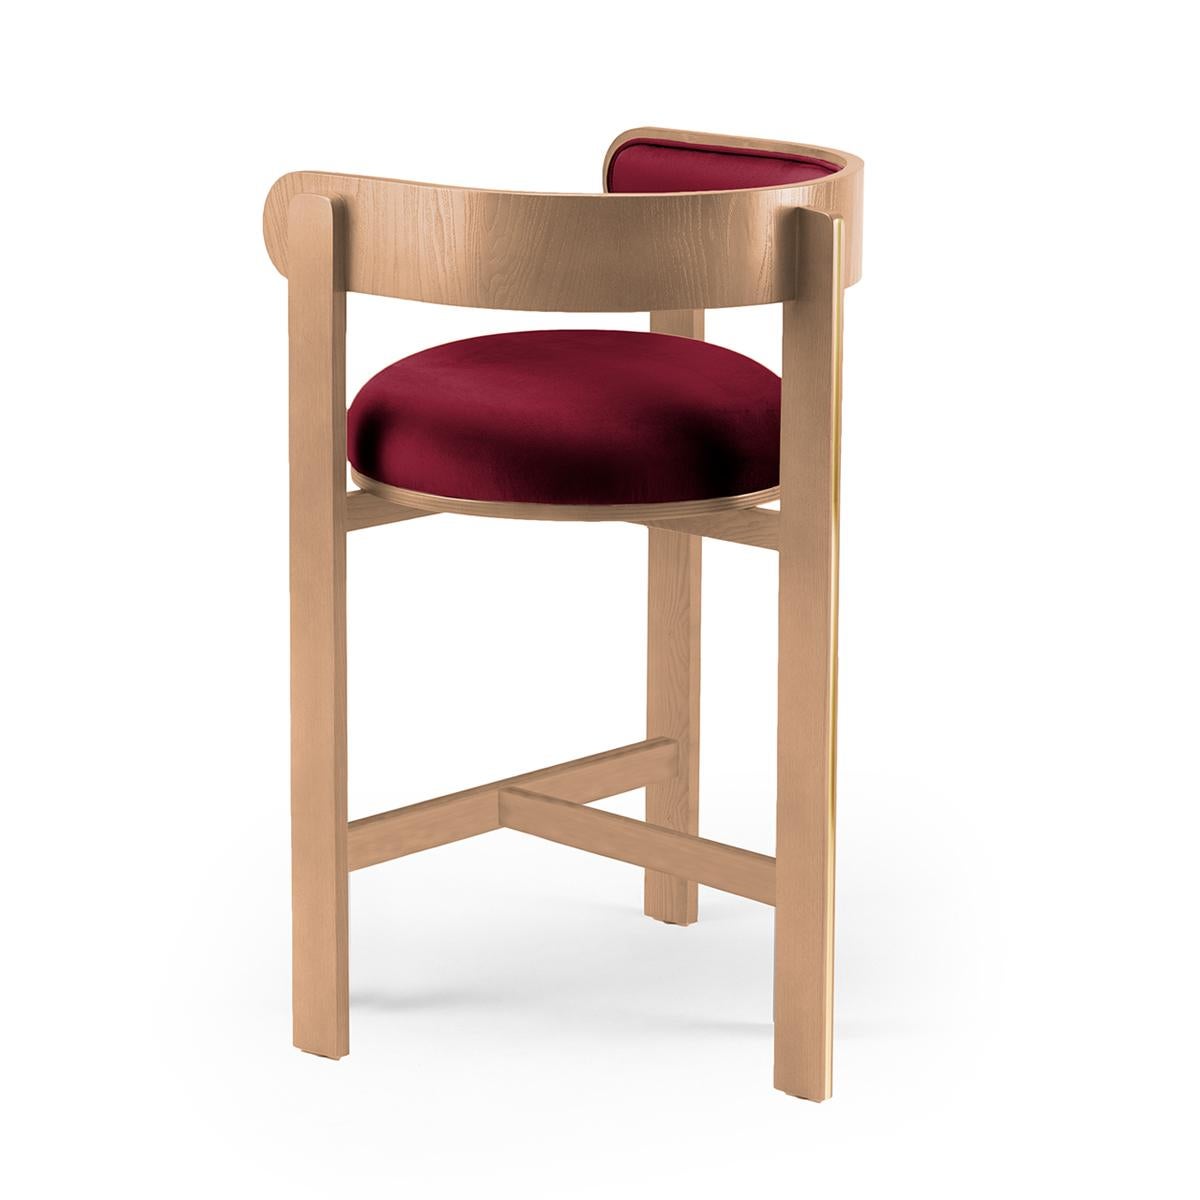 Portuguese Belle Epoque bent wood Moulin Orange Paprika Velvet Upholstered Counter Chair For Sale